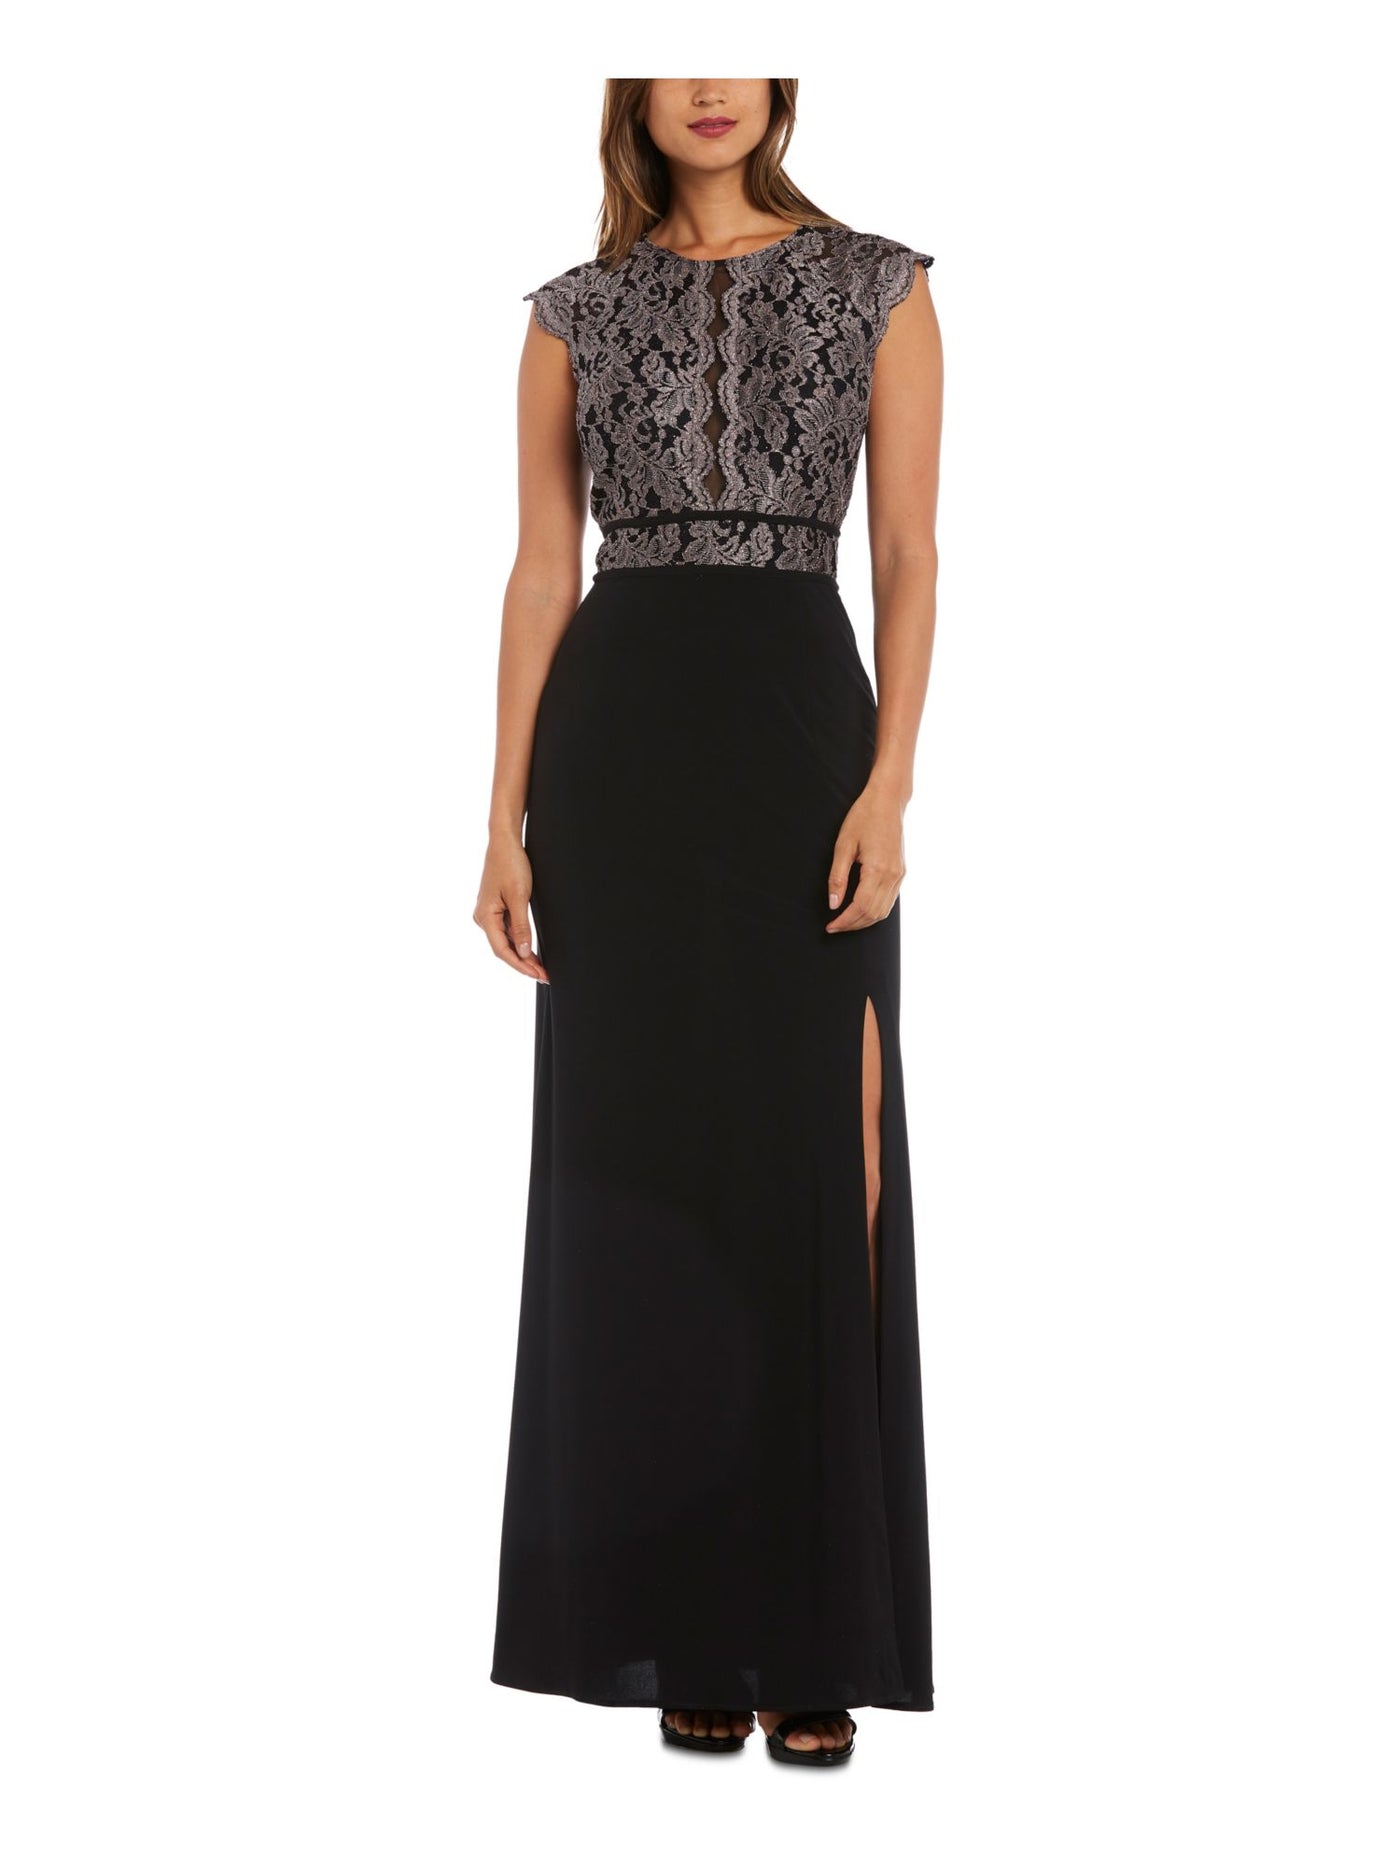 MORGAN & CO Womens Black Glitter Sheer Floral Cap Sleeve Jewel Neck Maxi Evening Sheath Dress Juniors 5